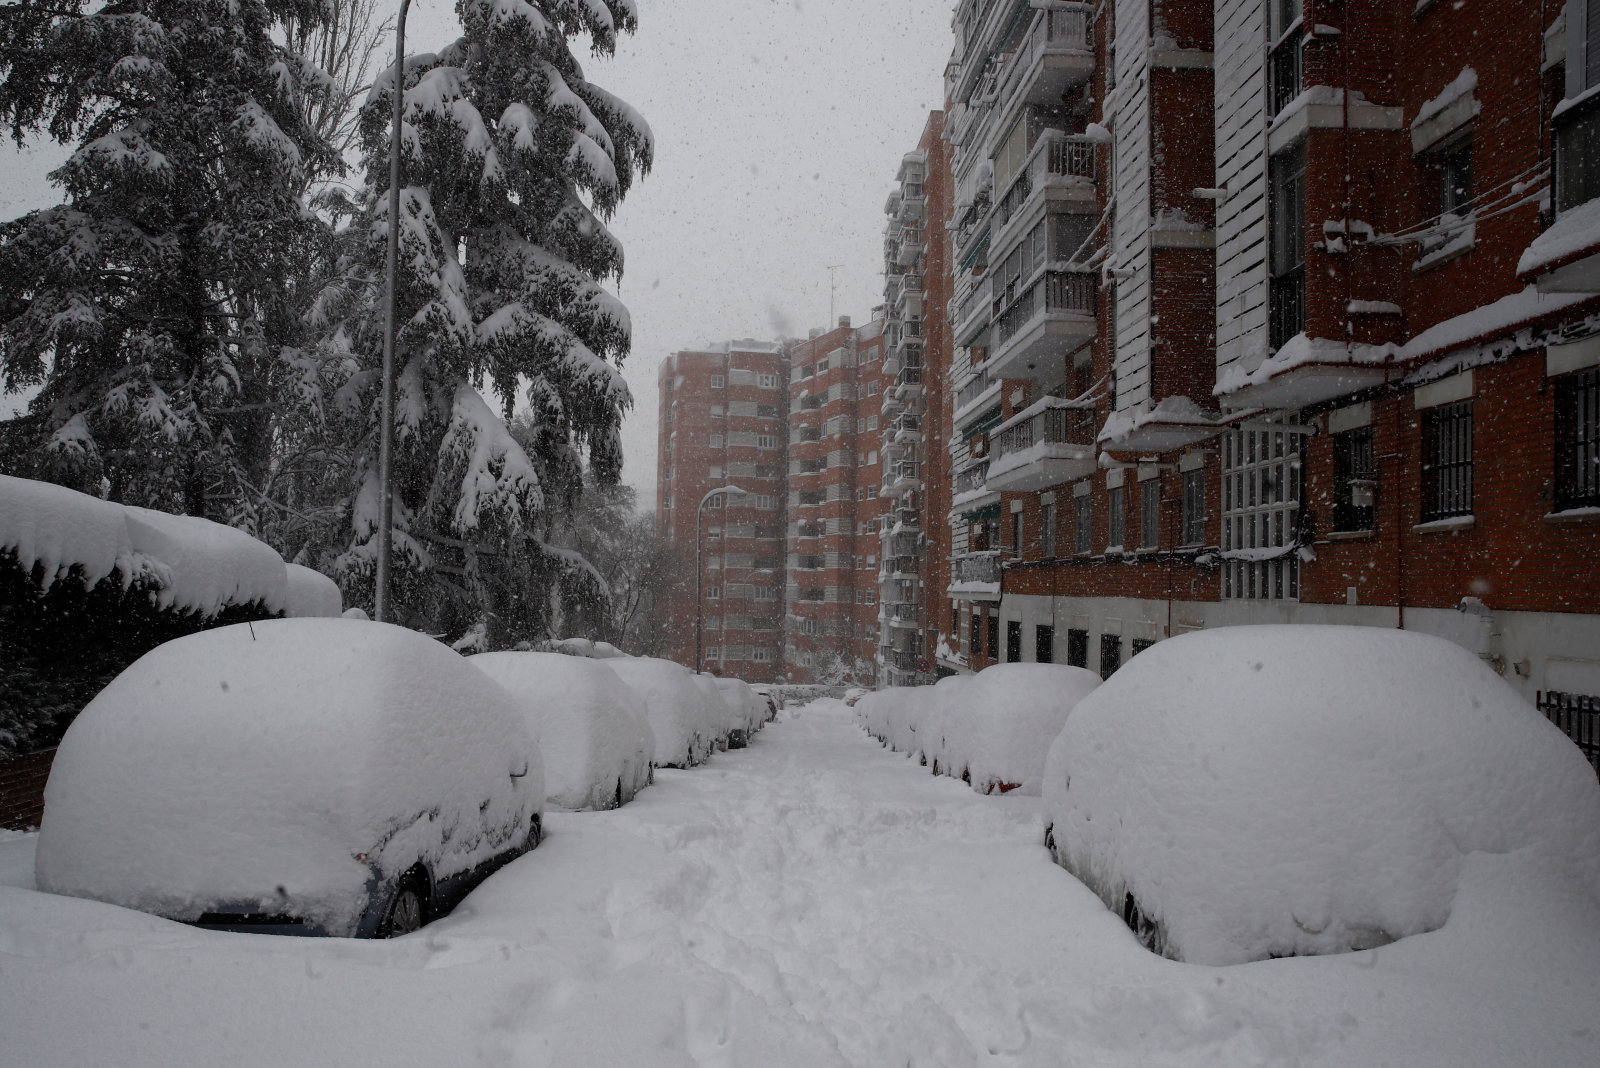 Hiszpania zasypana śniegiem EPA/BALLESTEROS 